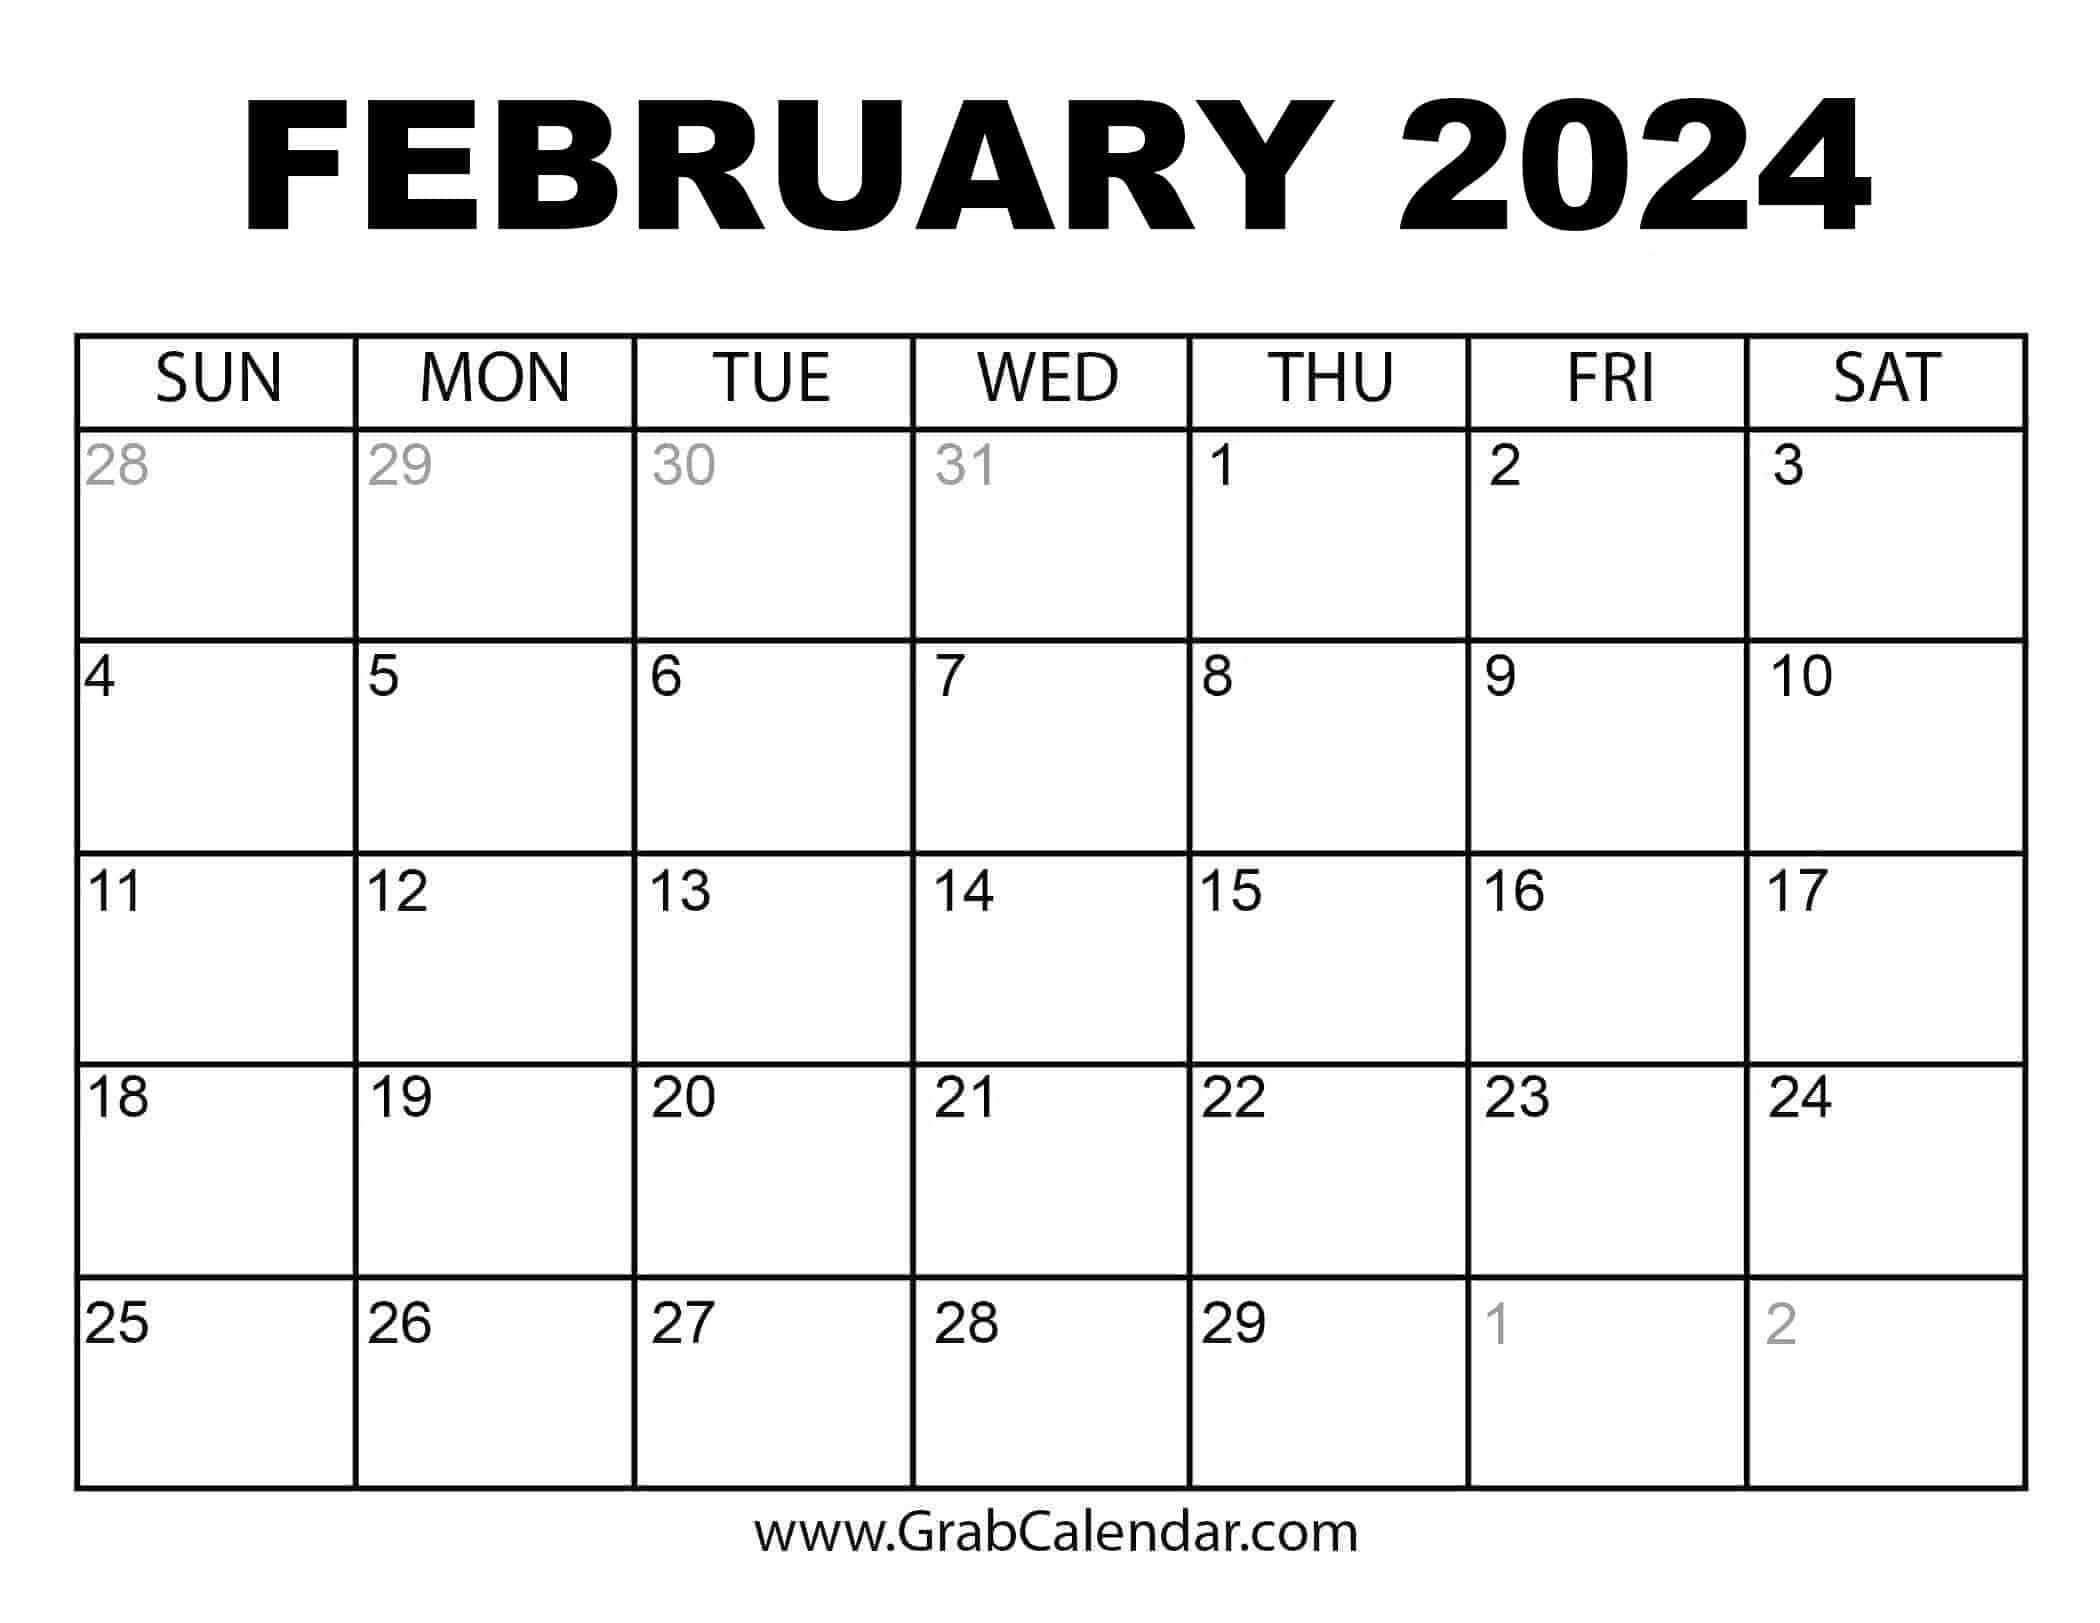 February 2024 Calendar To Print Lani Shanta - Free Printable 2024 February Calendar